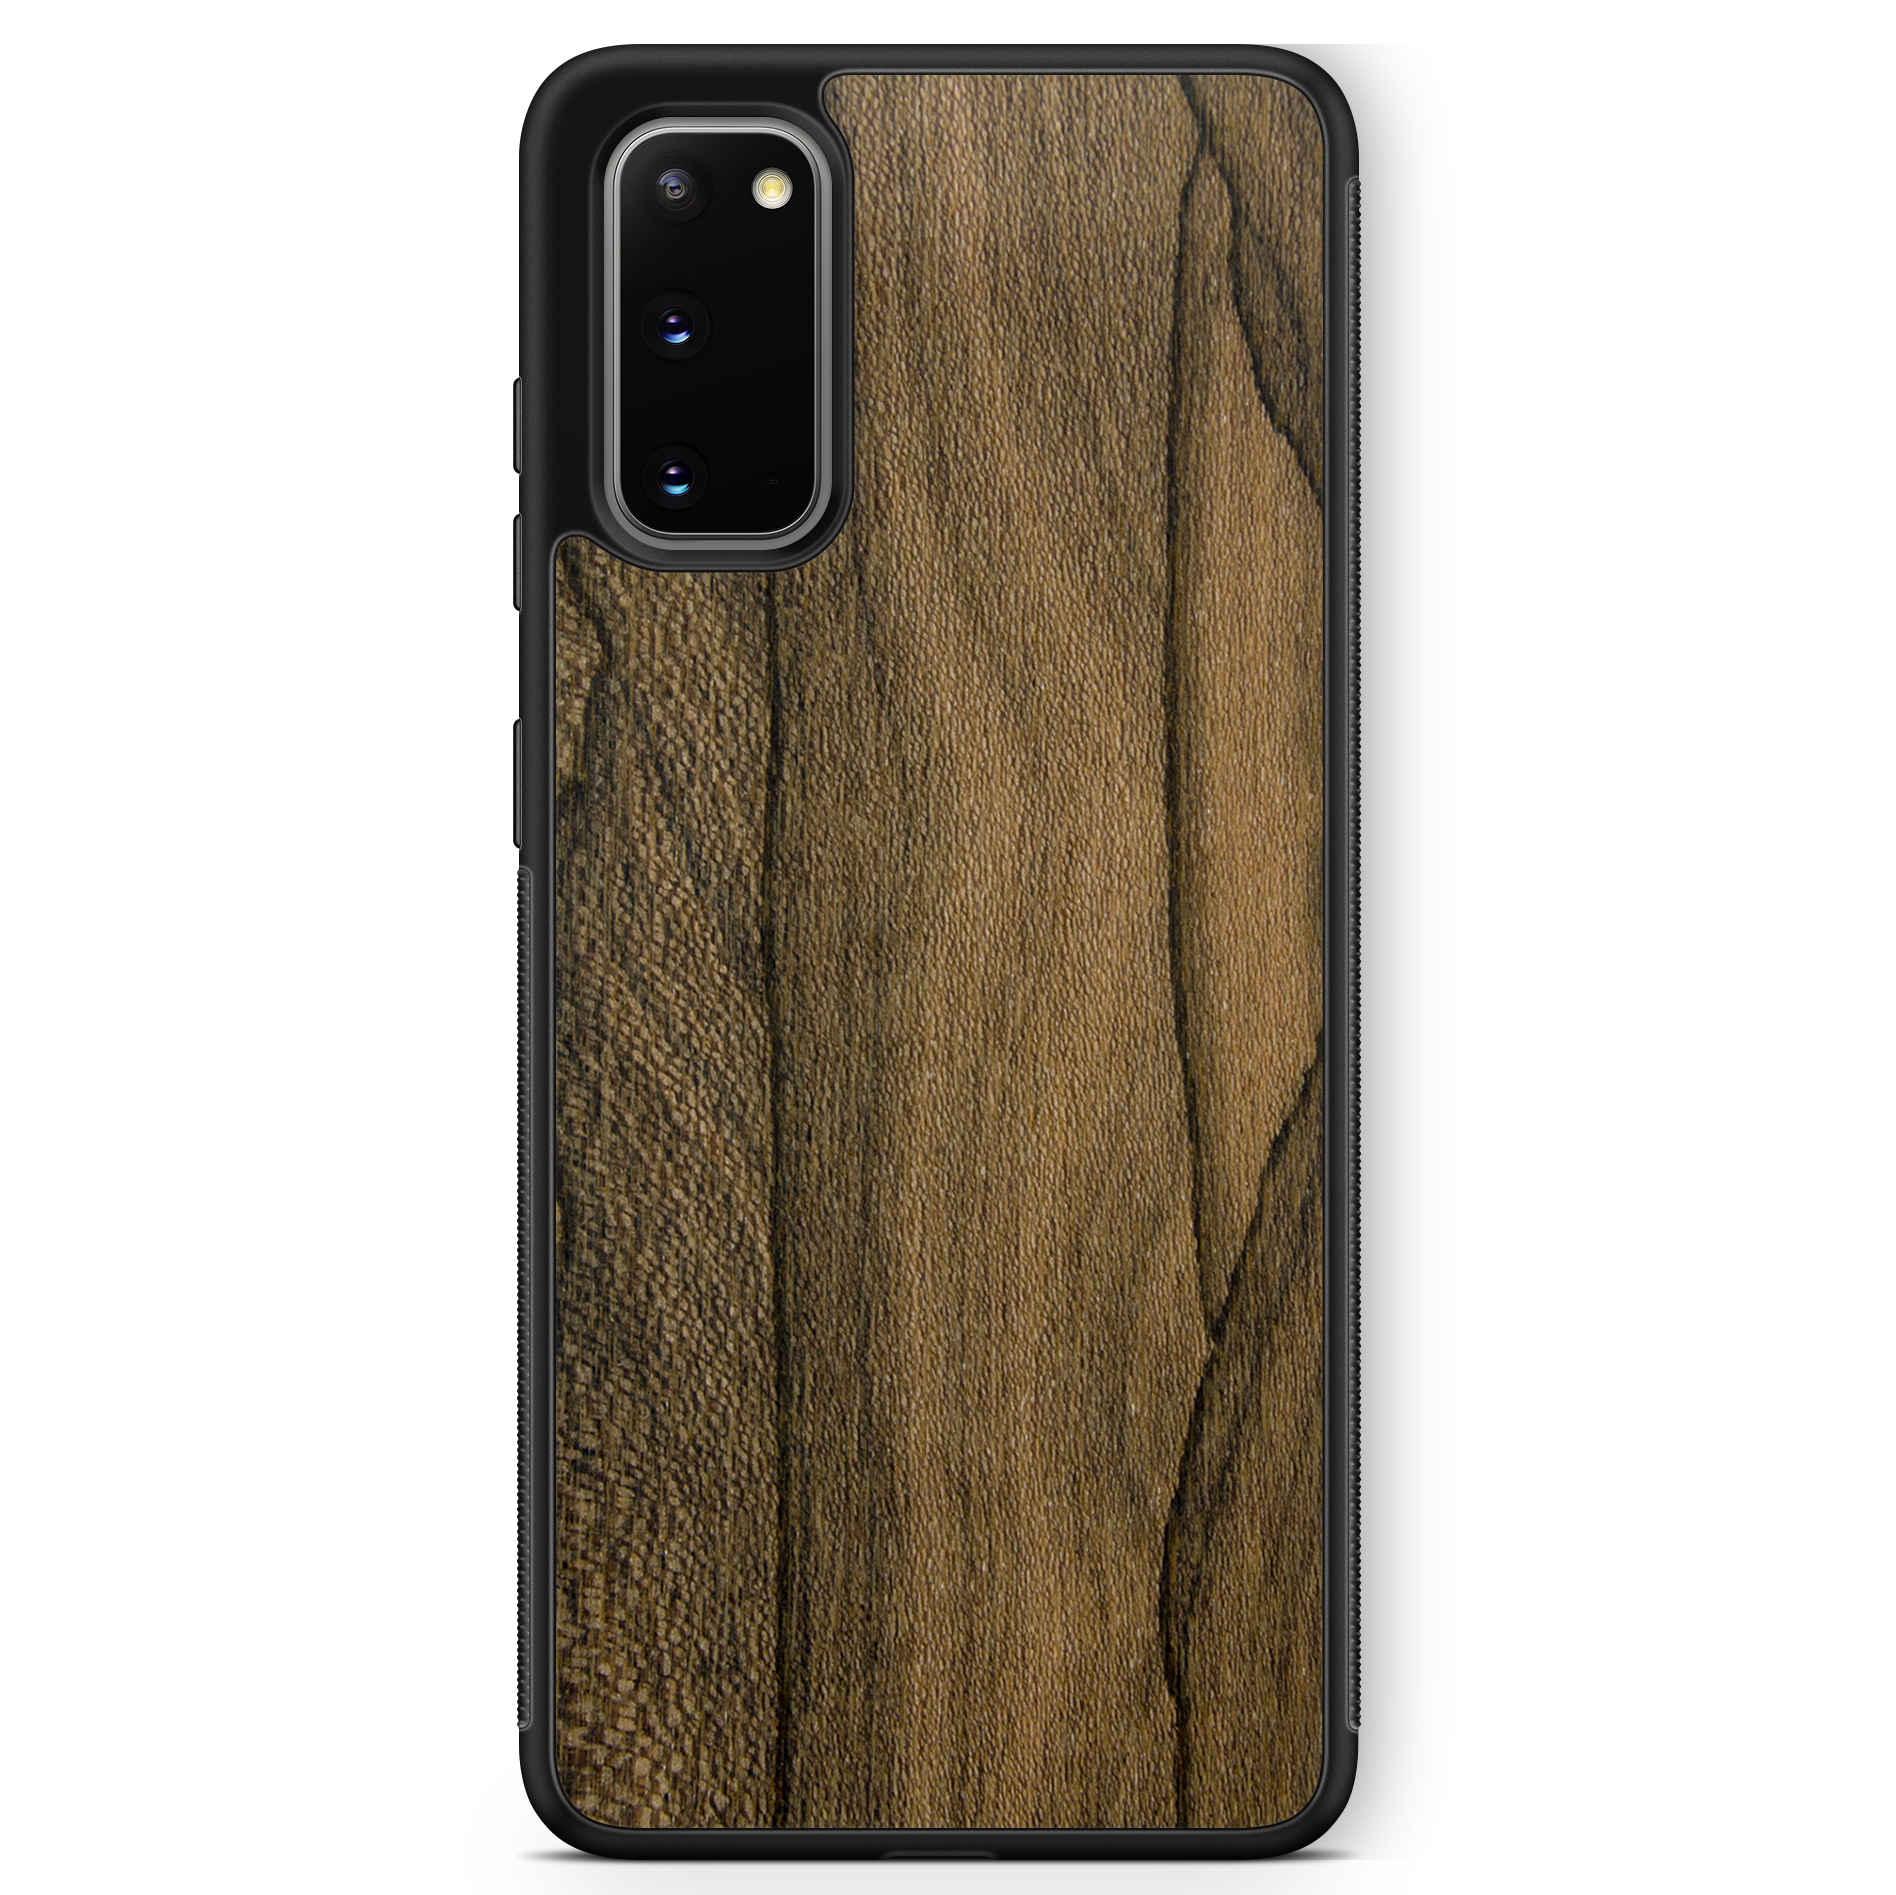 Caja del teléfono Samsung S20 de madera de ziricote